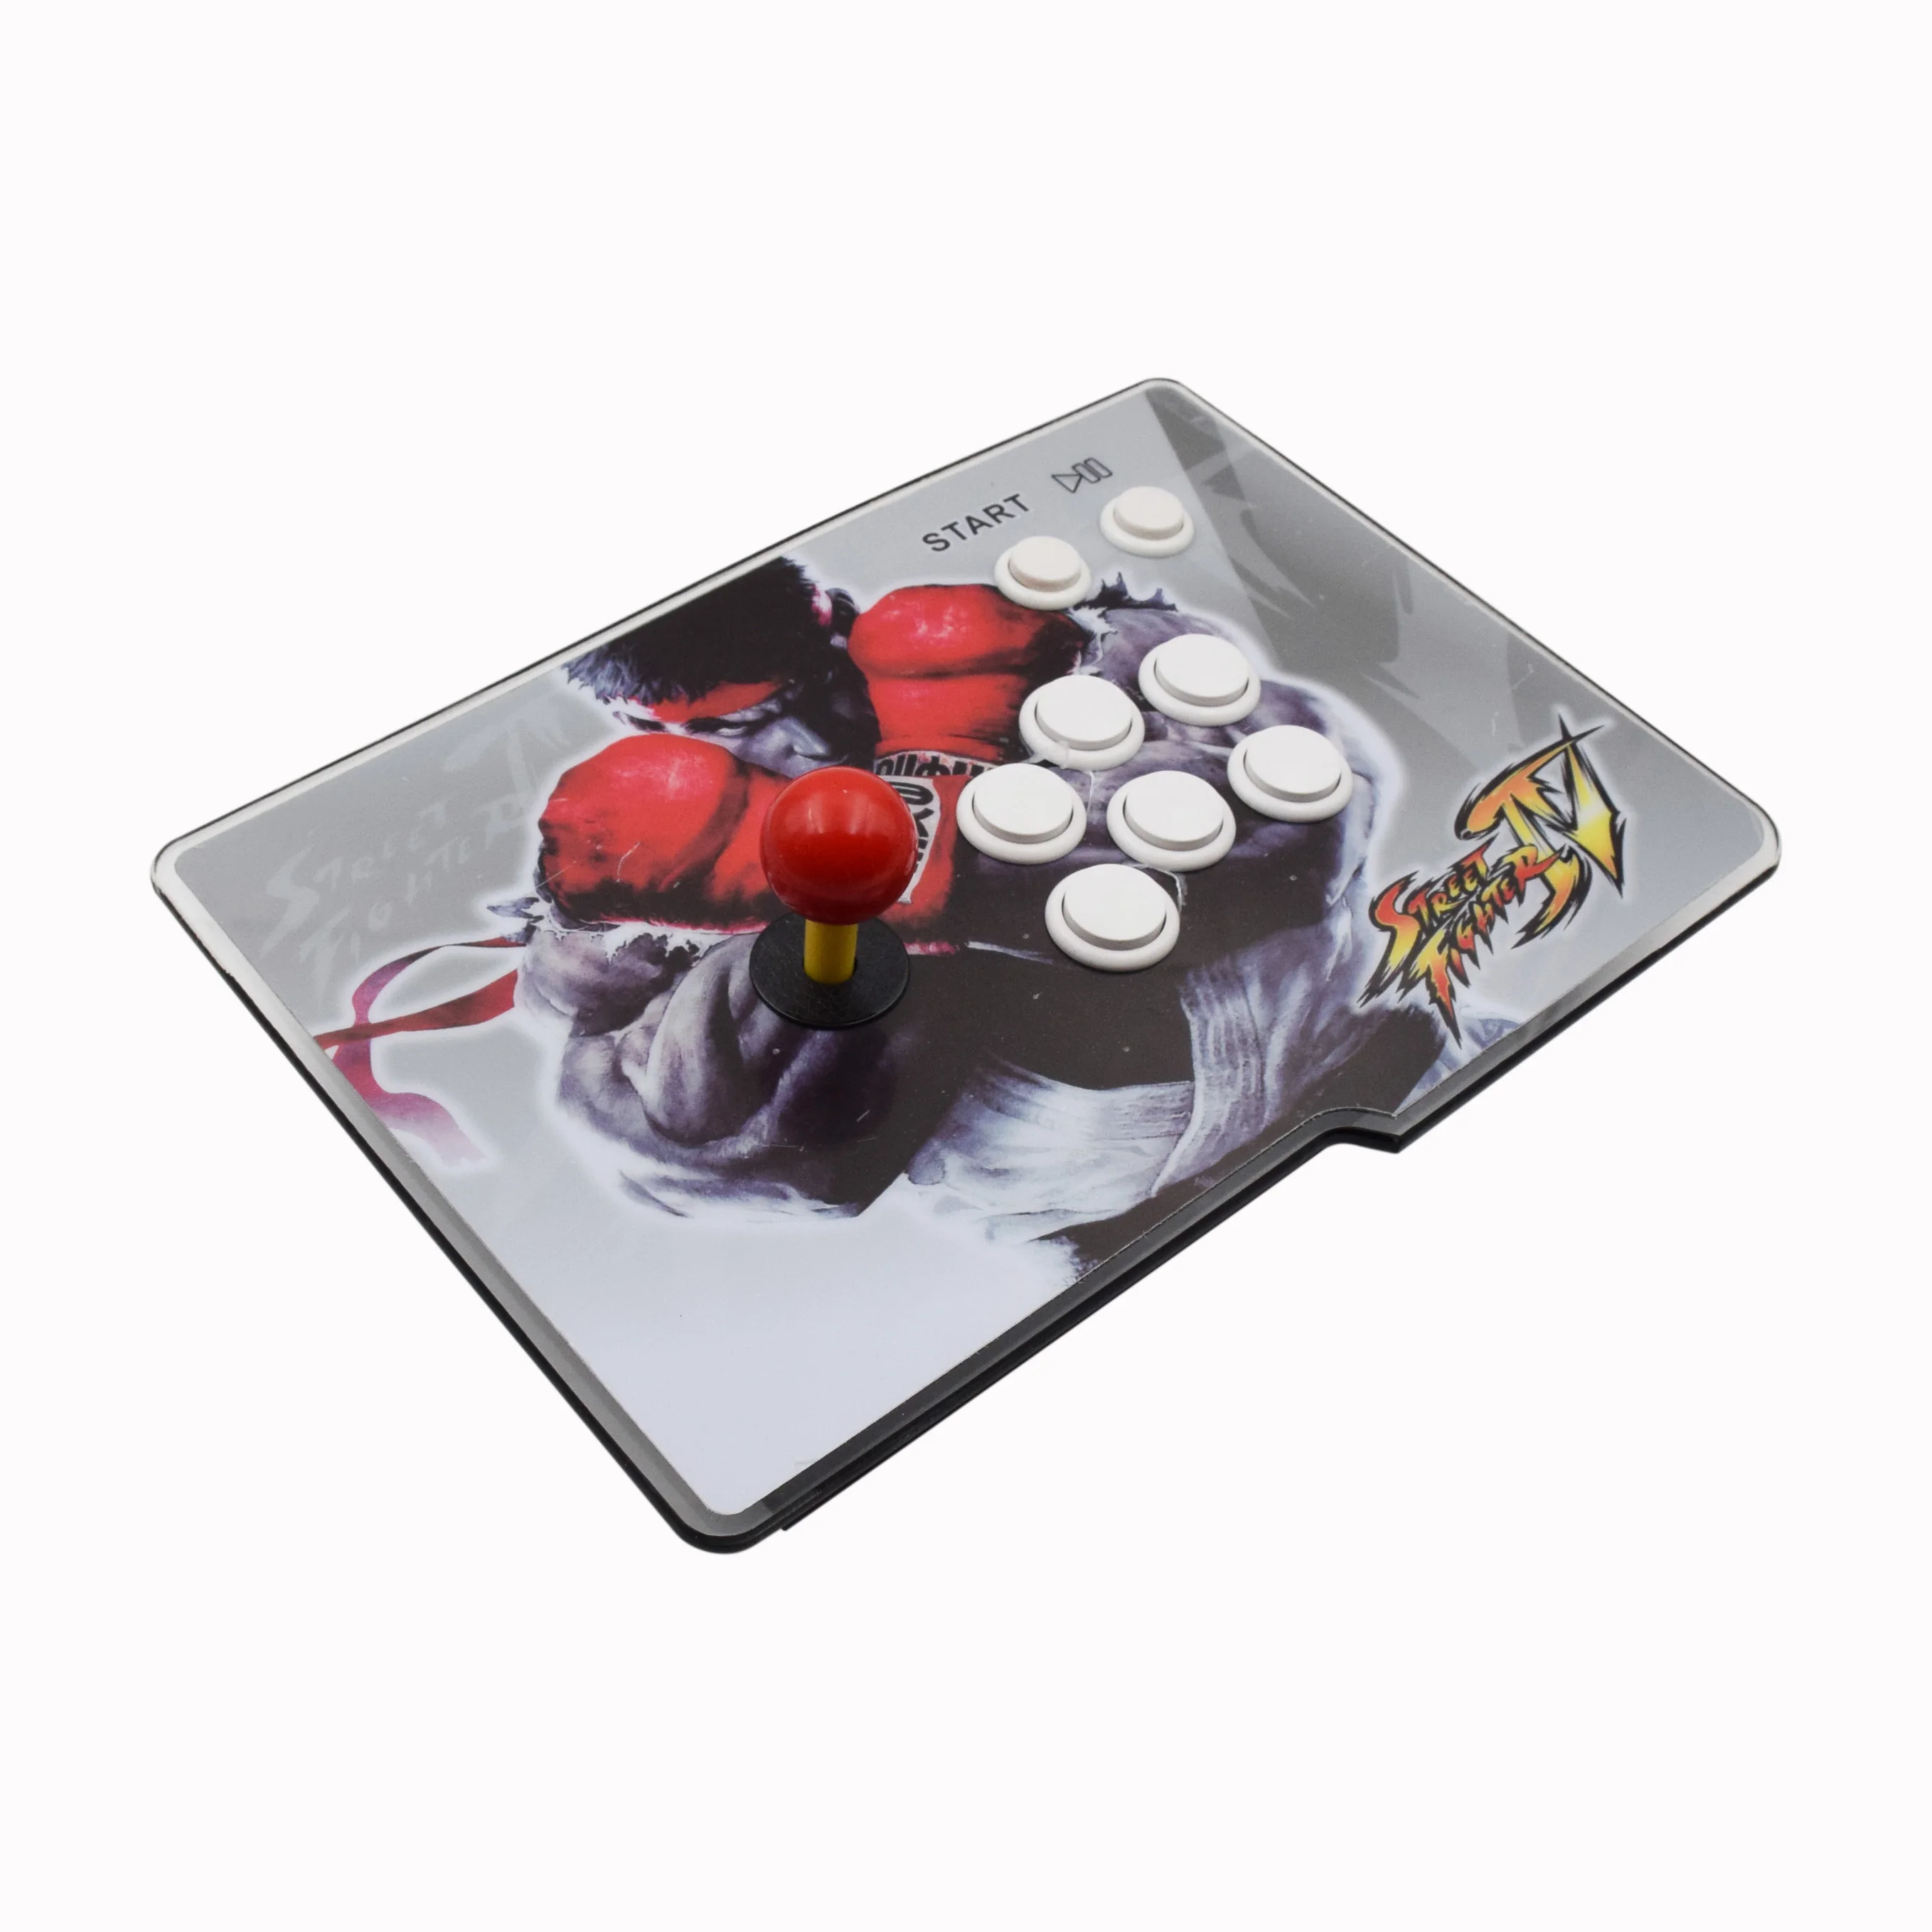 

Pandora SAGA Box 5000 in 1 Portable Arcade Console Joystick Buttons PCB Board Retro Video Game Arcade Machine Support 2 Players